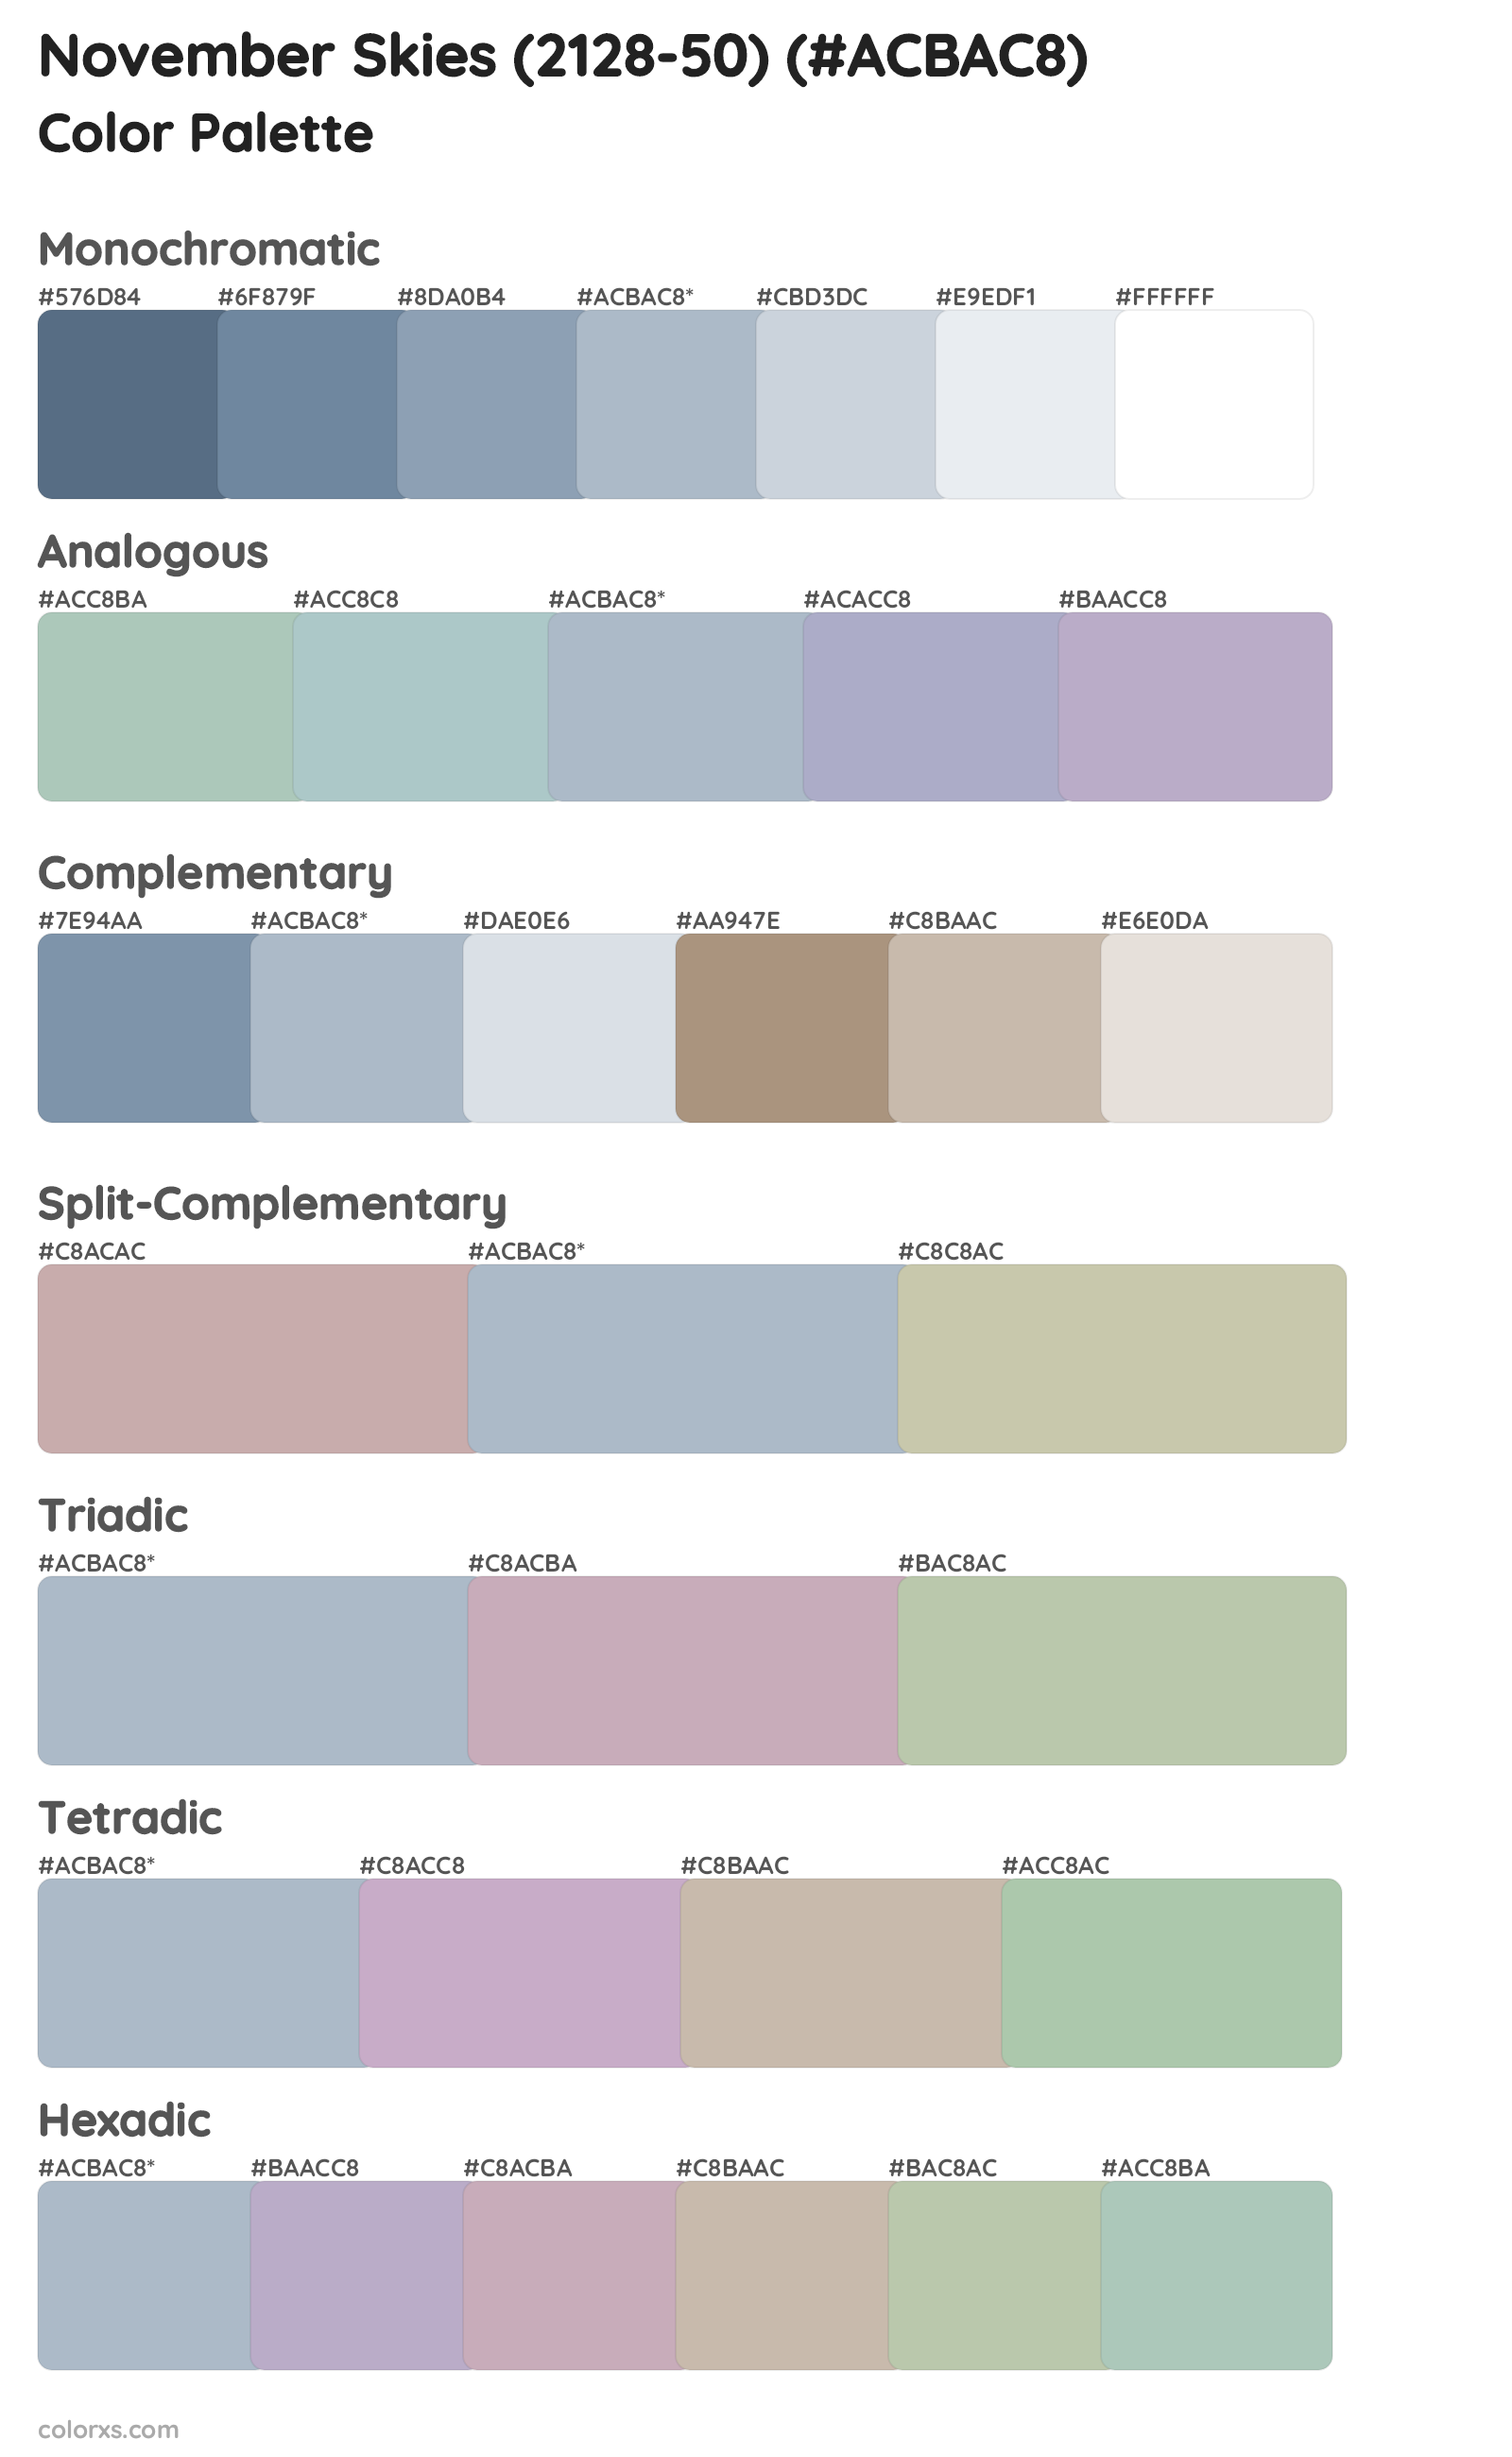 November Skies (2128-50) Color Scheme Palettes